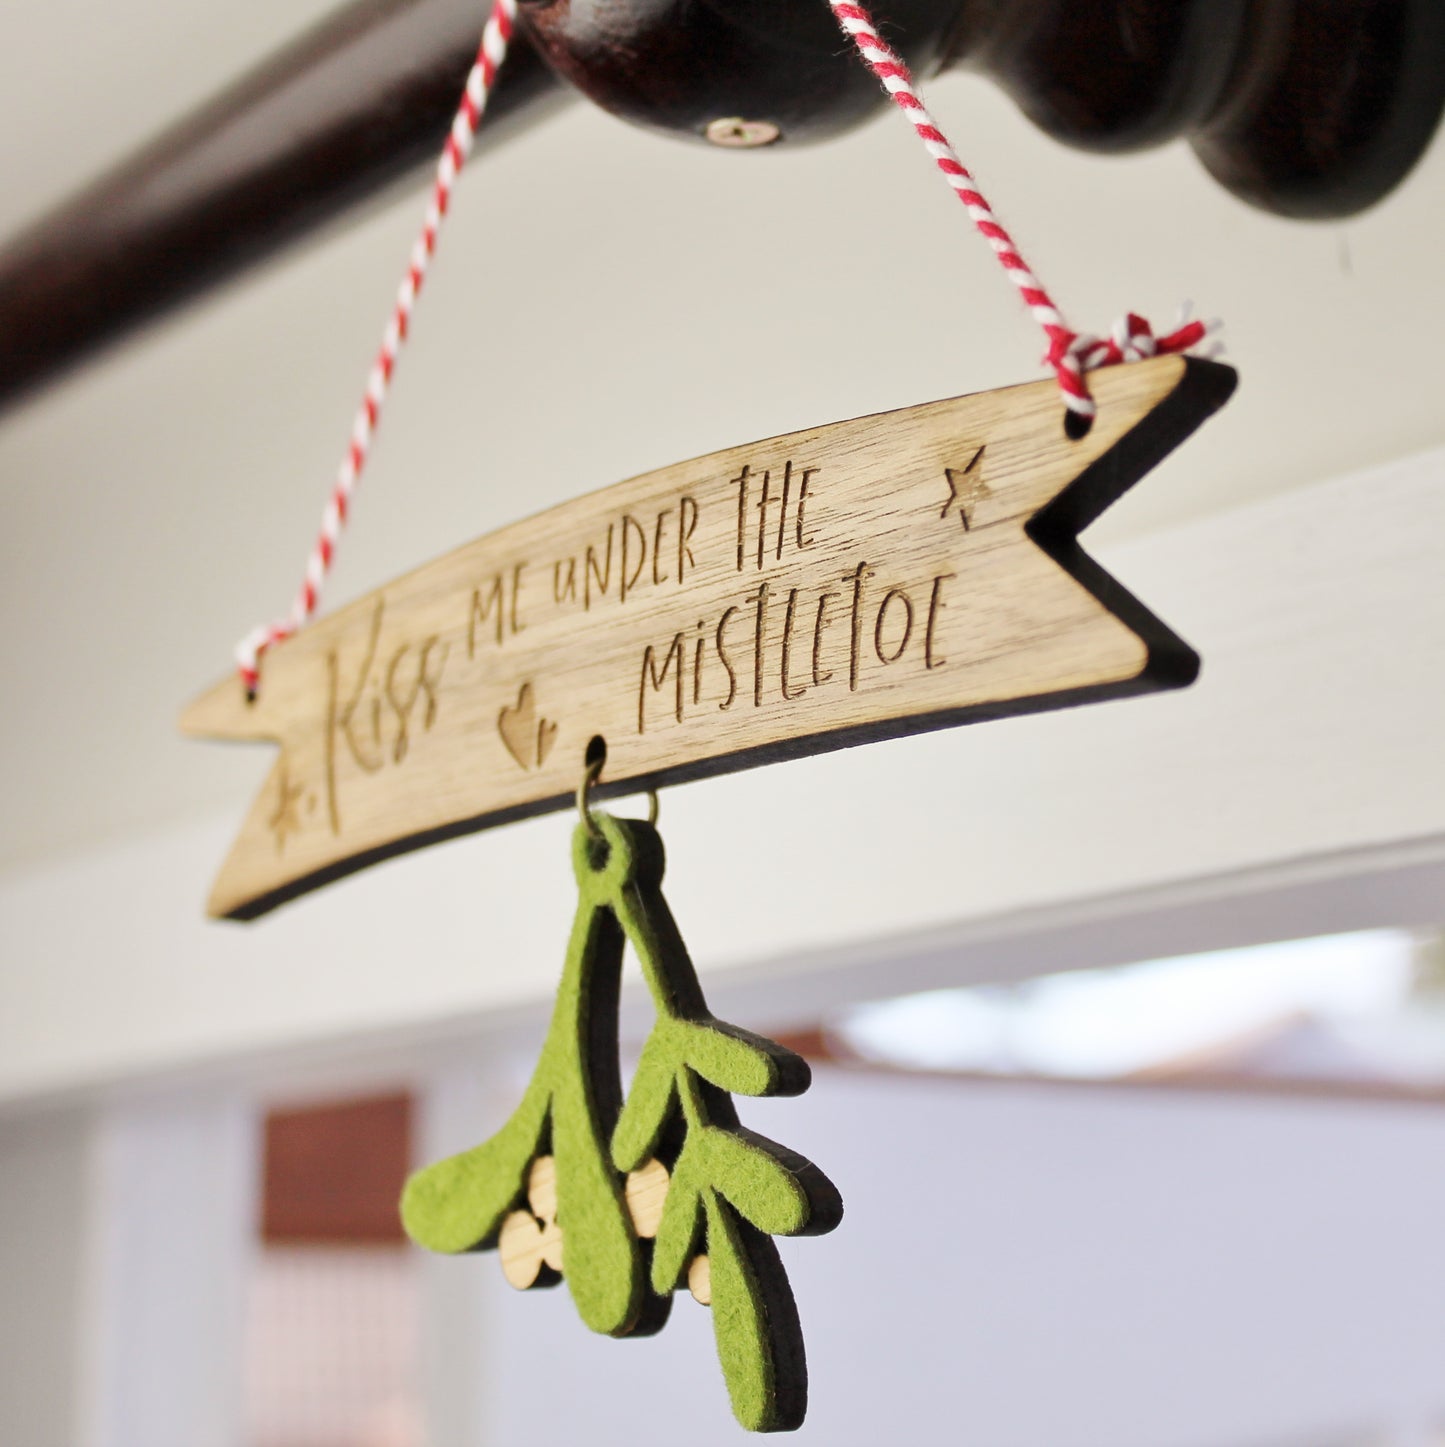 Mistletoe Hanging Christmas Decoration